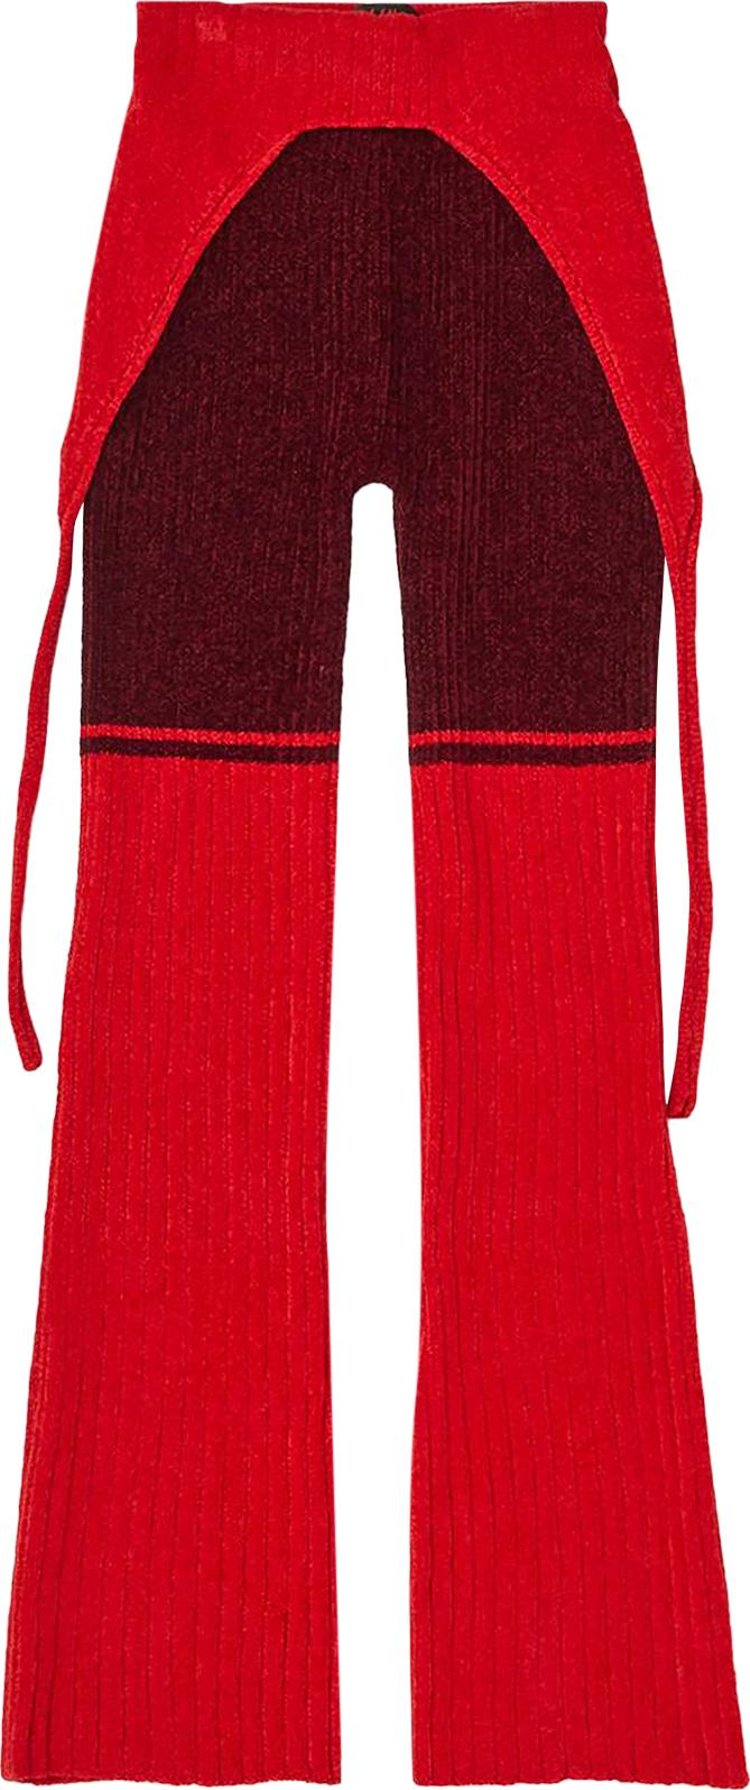 Брюки Ottolinger Knit 'Red', красный брюки ottolinger размер s розовый